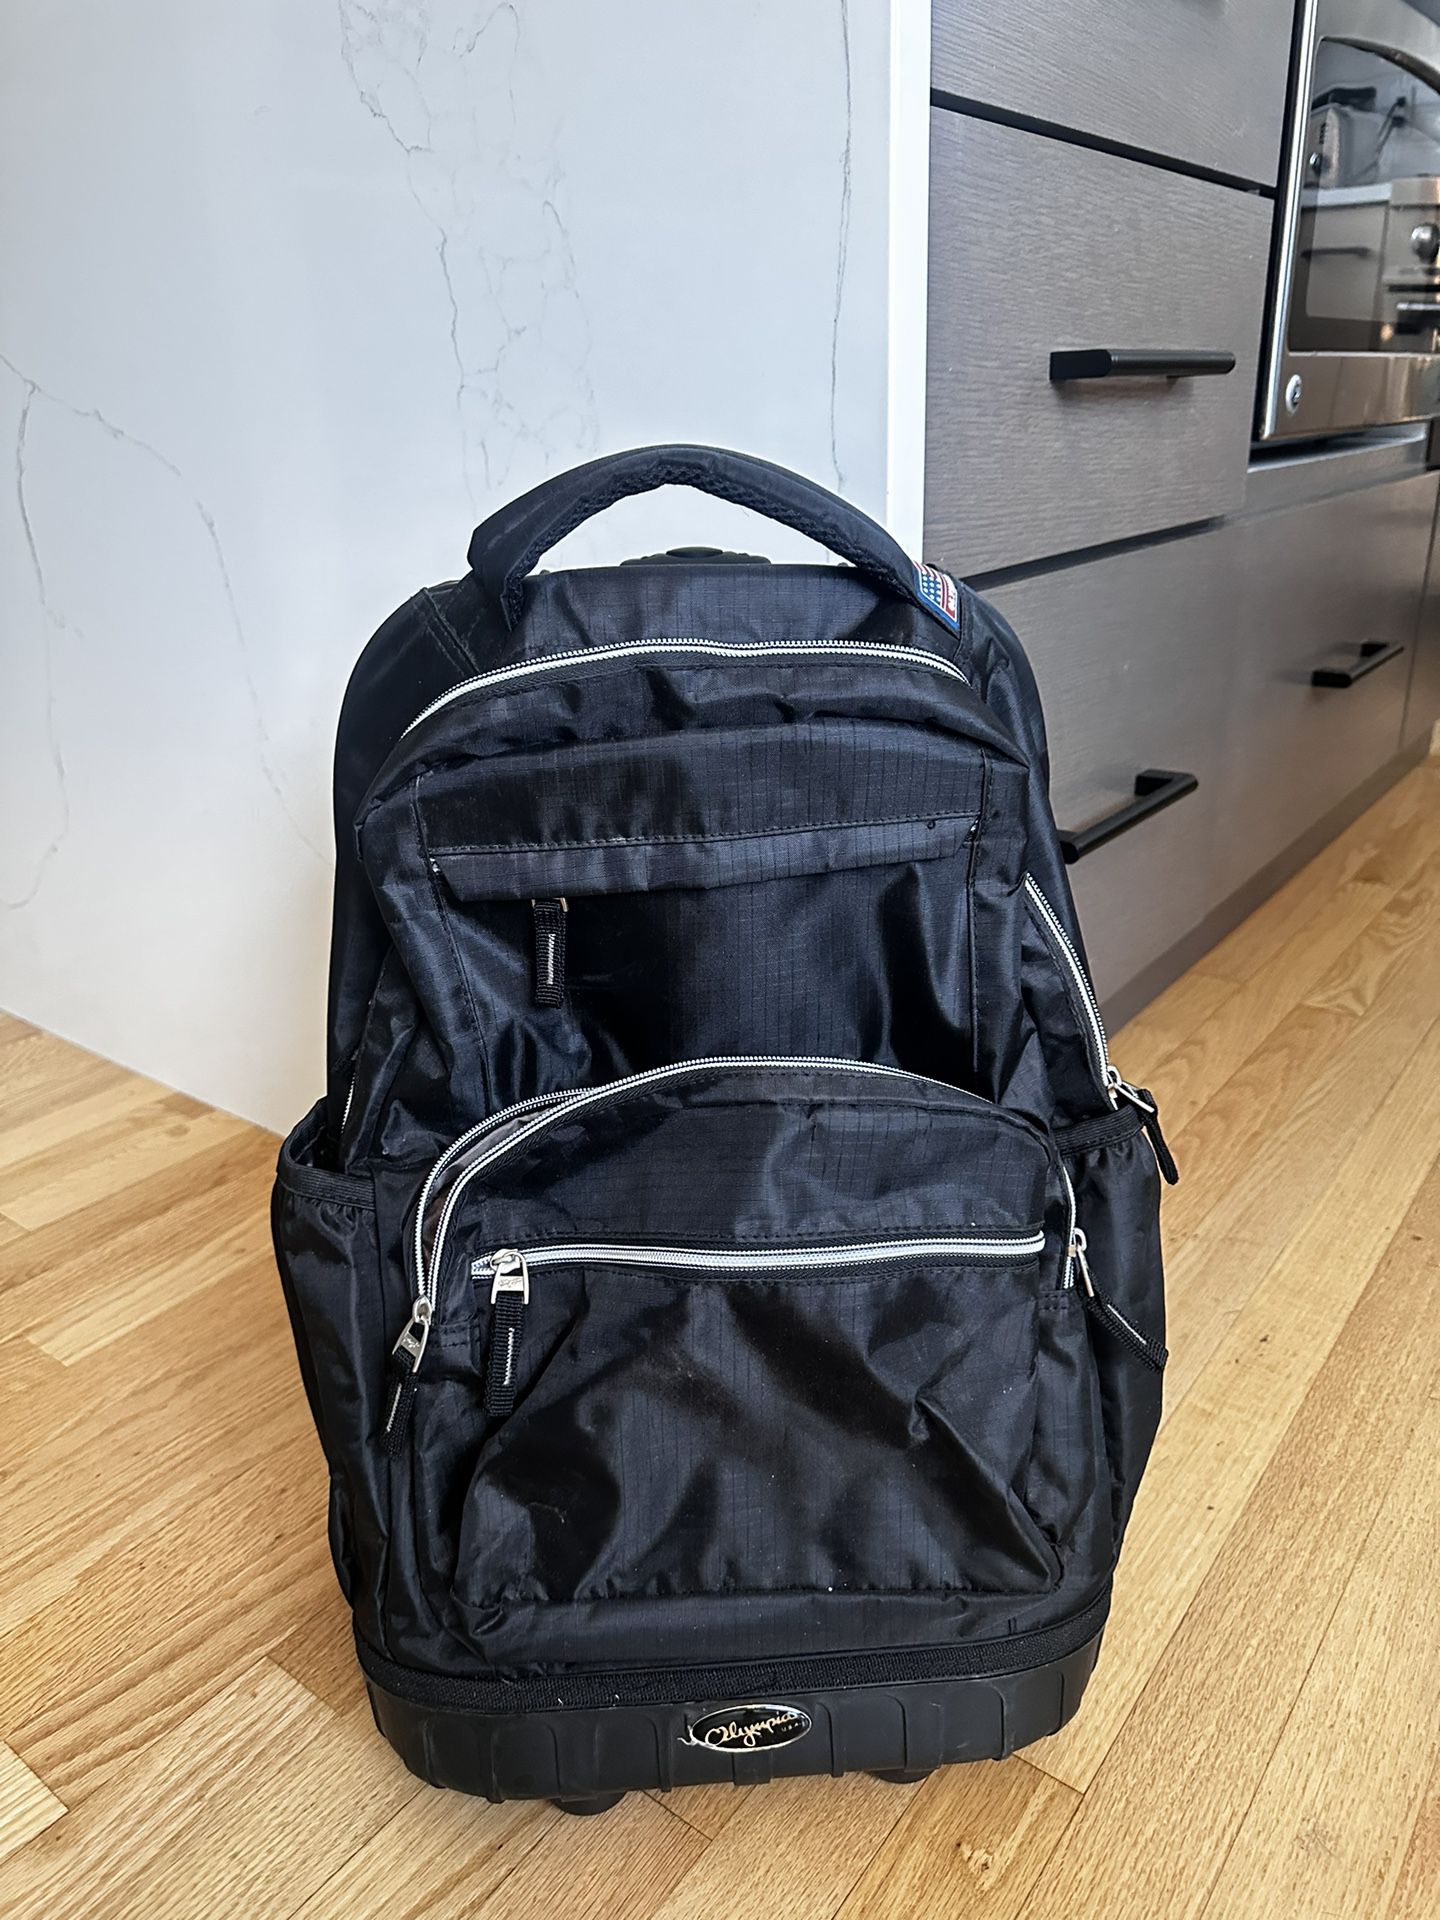 Olympia U.S.A Backpack / Travel Bag